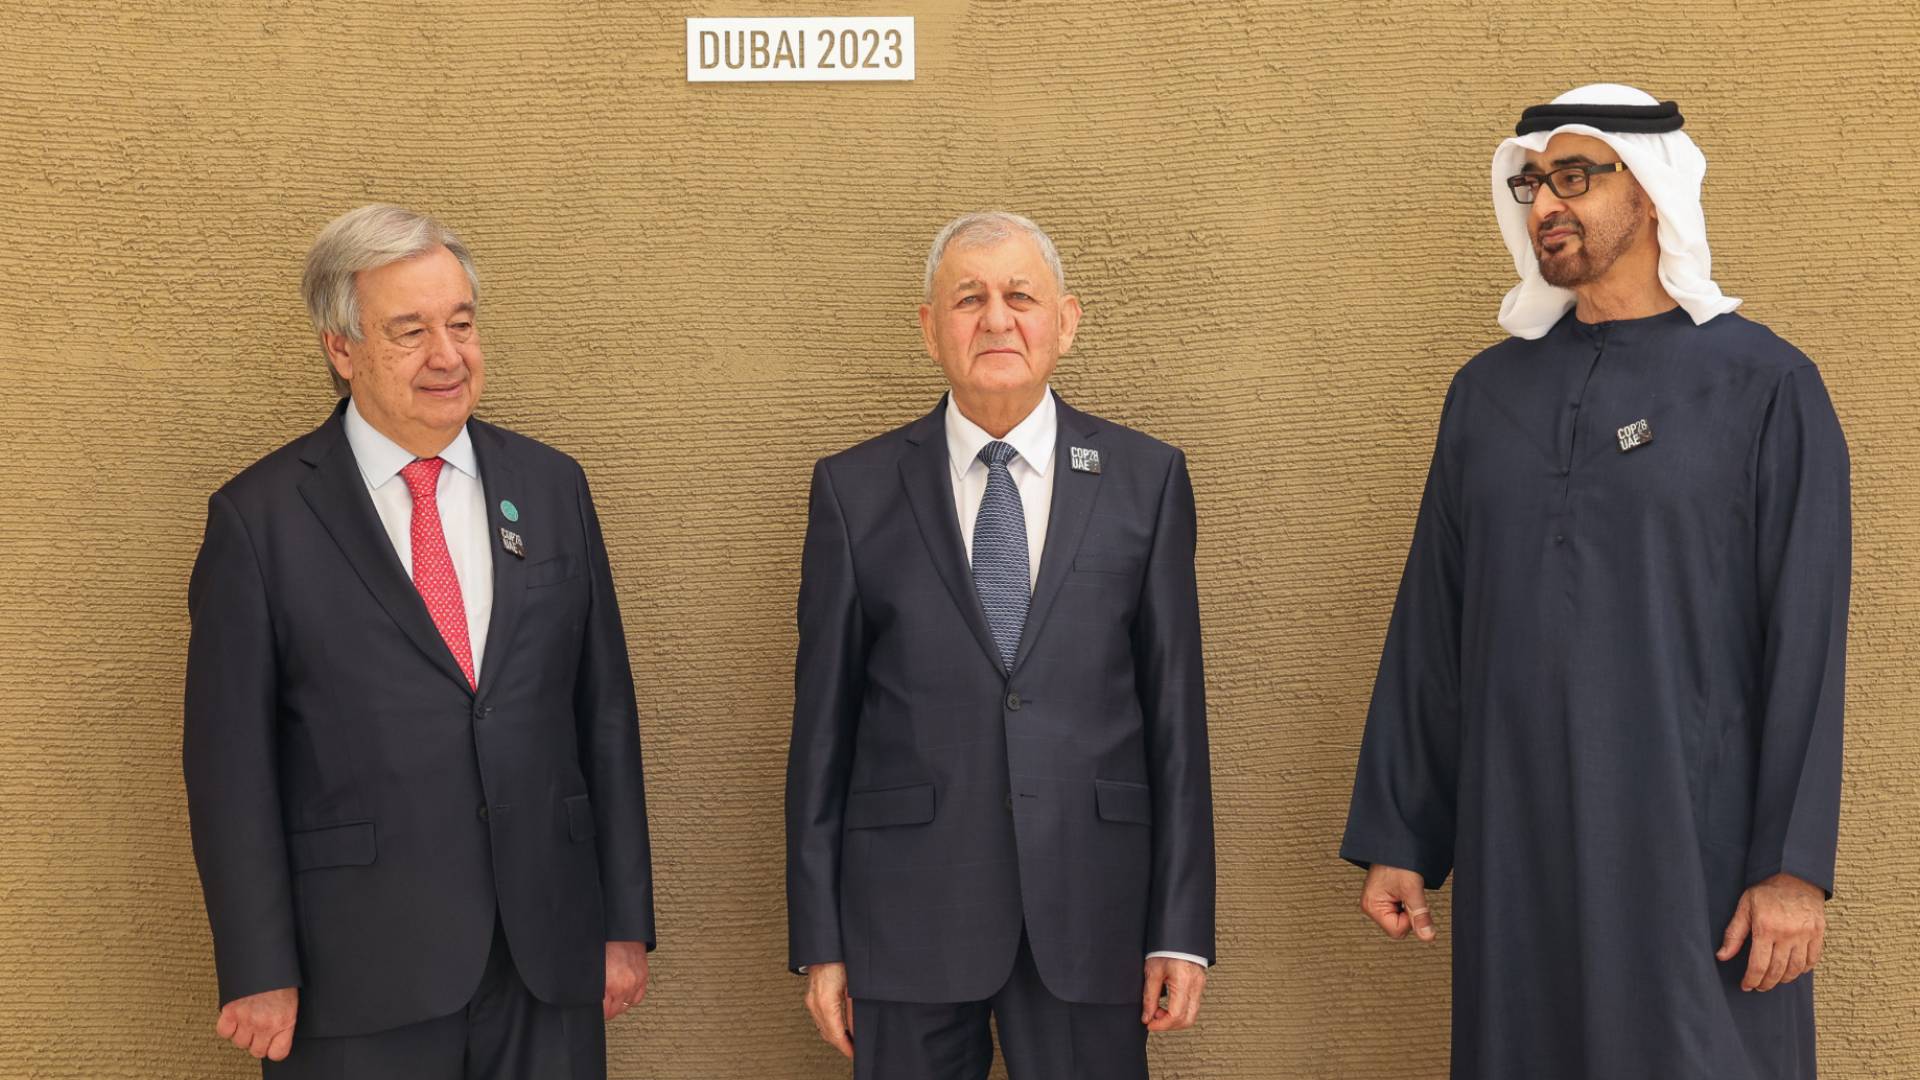  Iraqi President with UN Secretary General and UAE President.